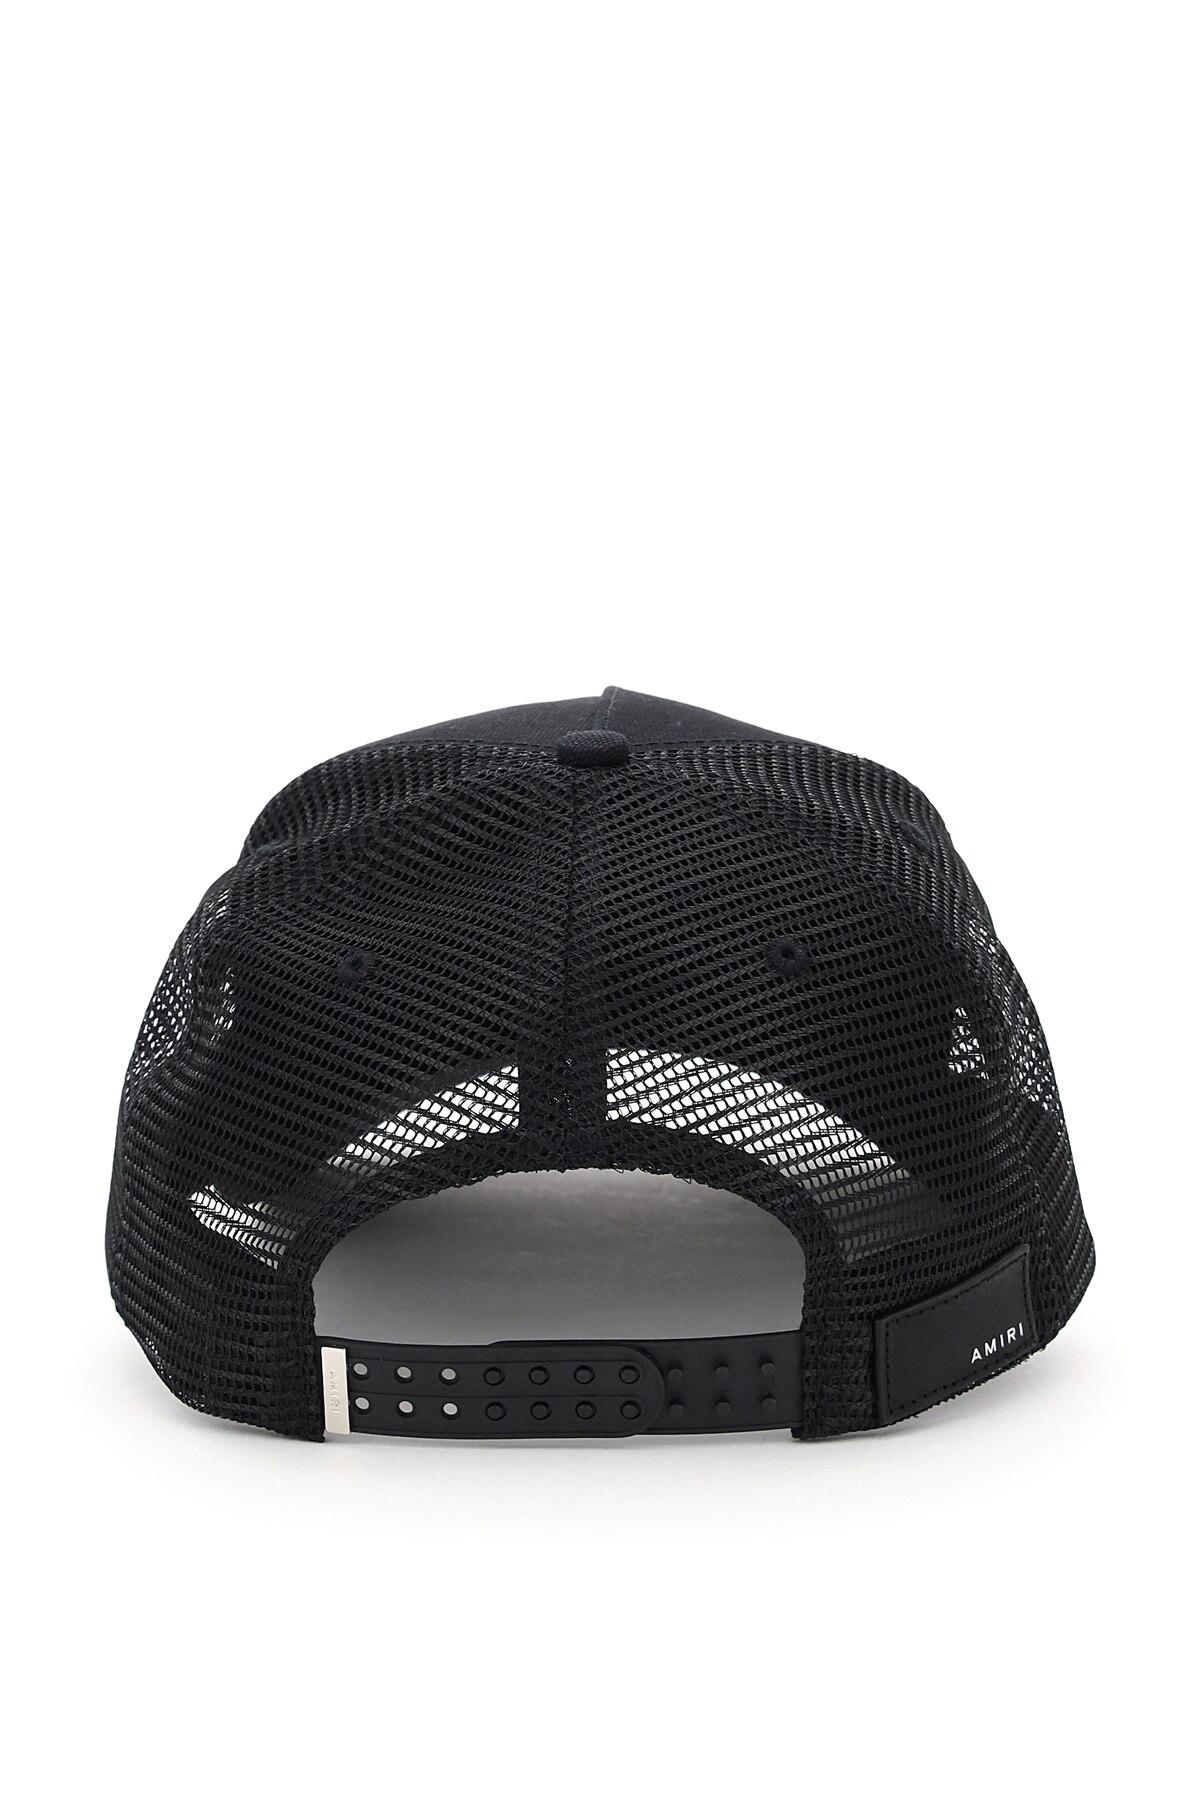 Amiri Cotton Core Logo Trucker Hat in Black,White (Black) for Men 